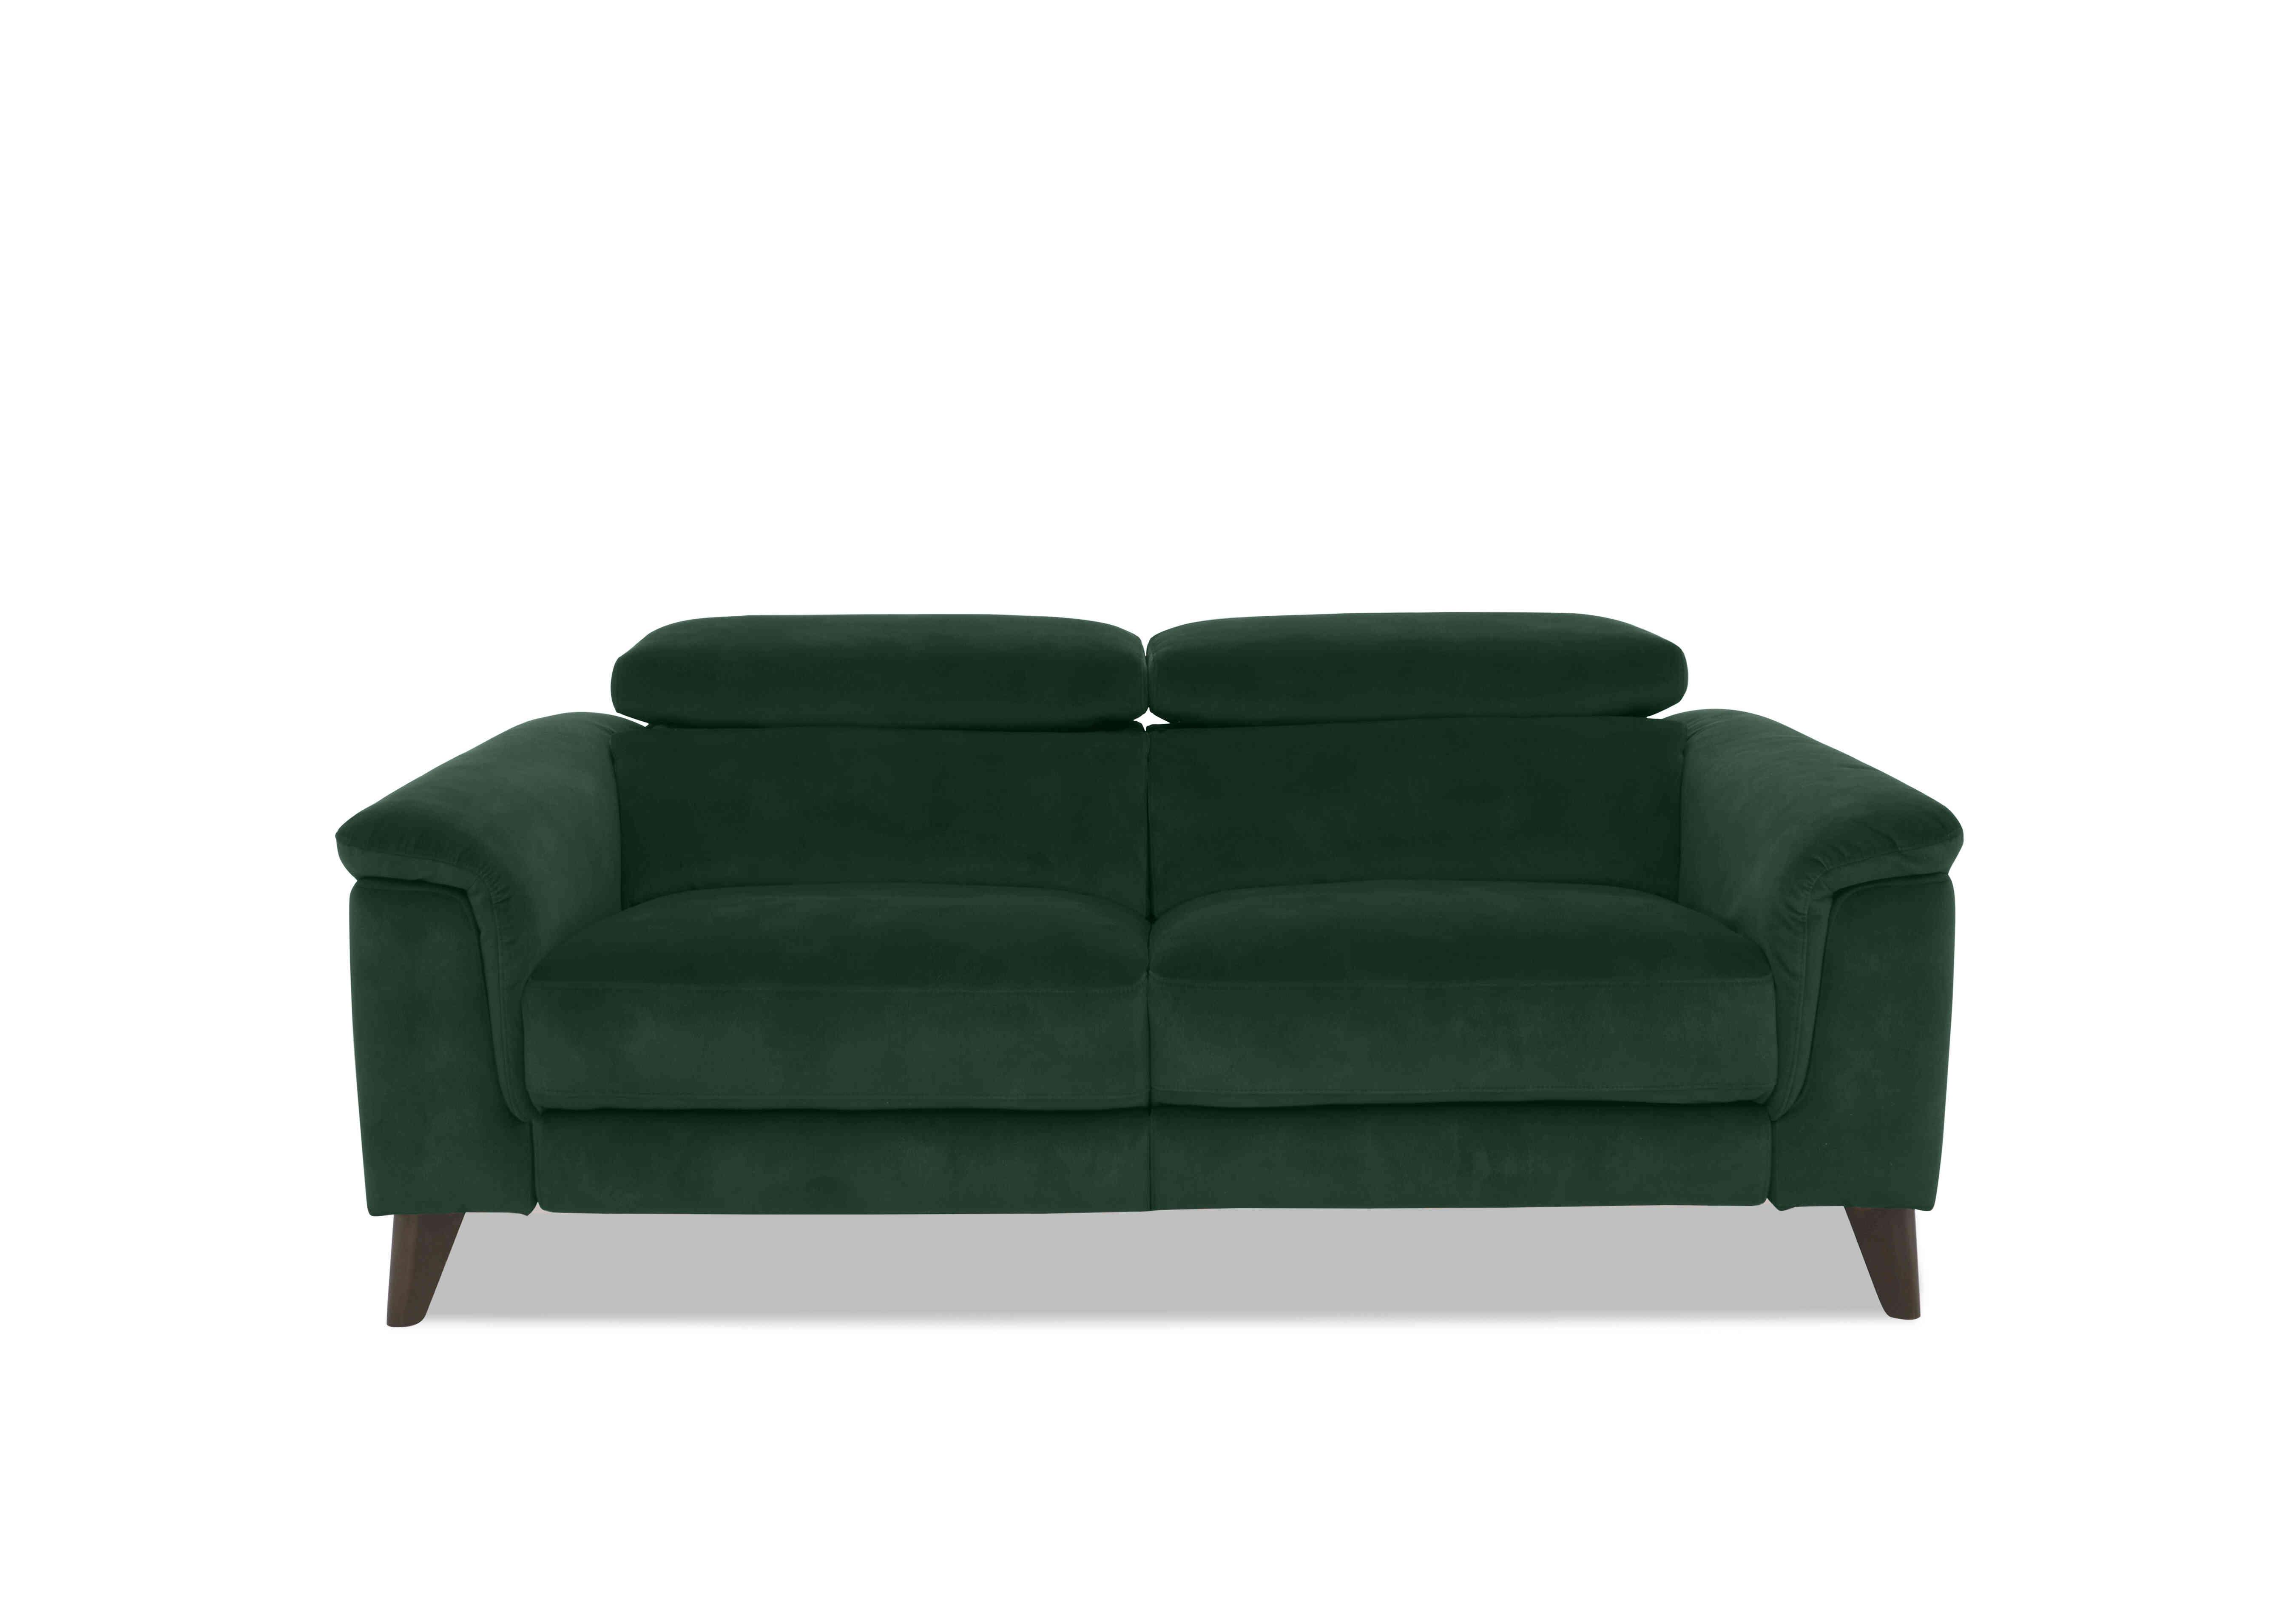 Wade 2 Seater Fabric Sofa in Fab-Meg-R37 Emerald Green on Furniture Village